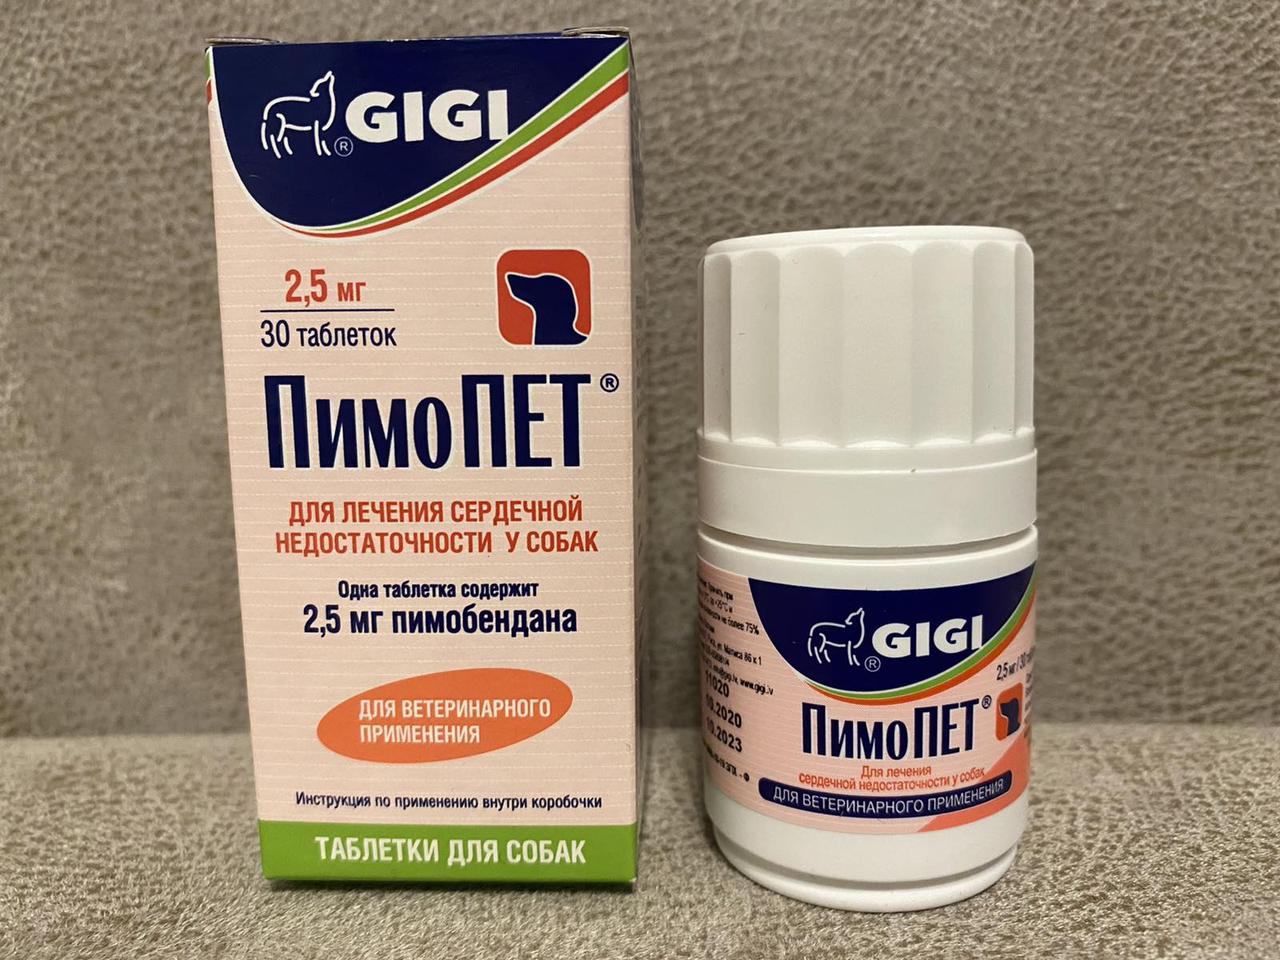 Пимопет 2,5 мг, 30 таблеток ( PimoPET )